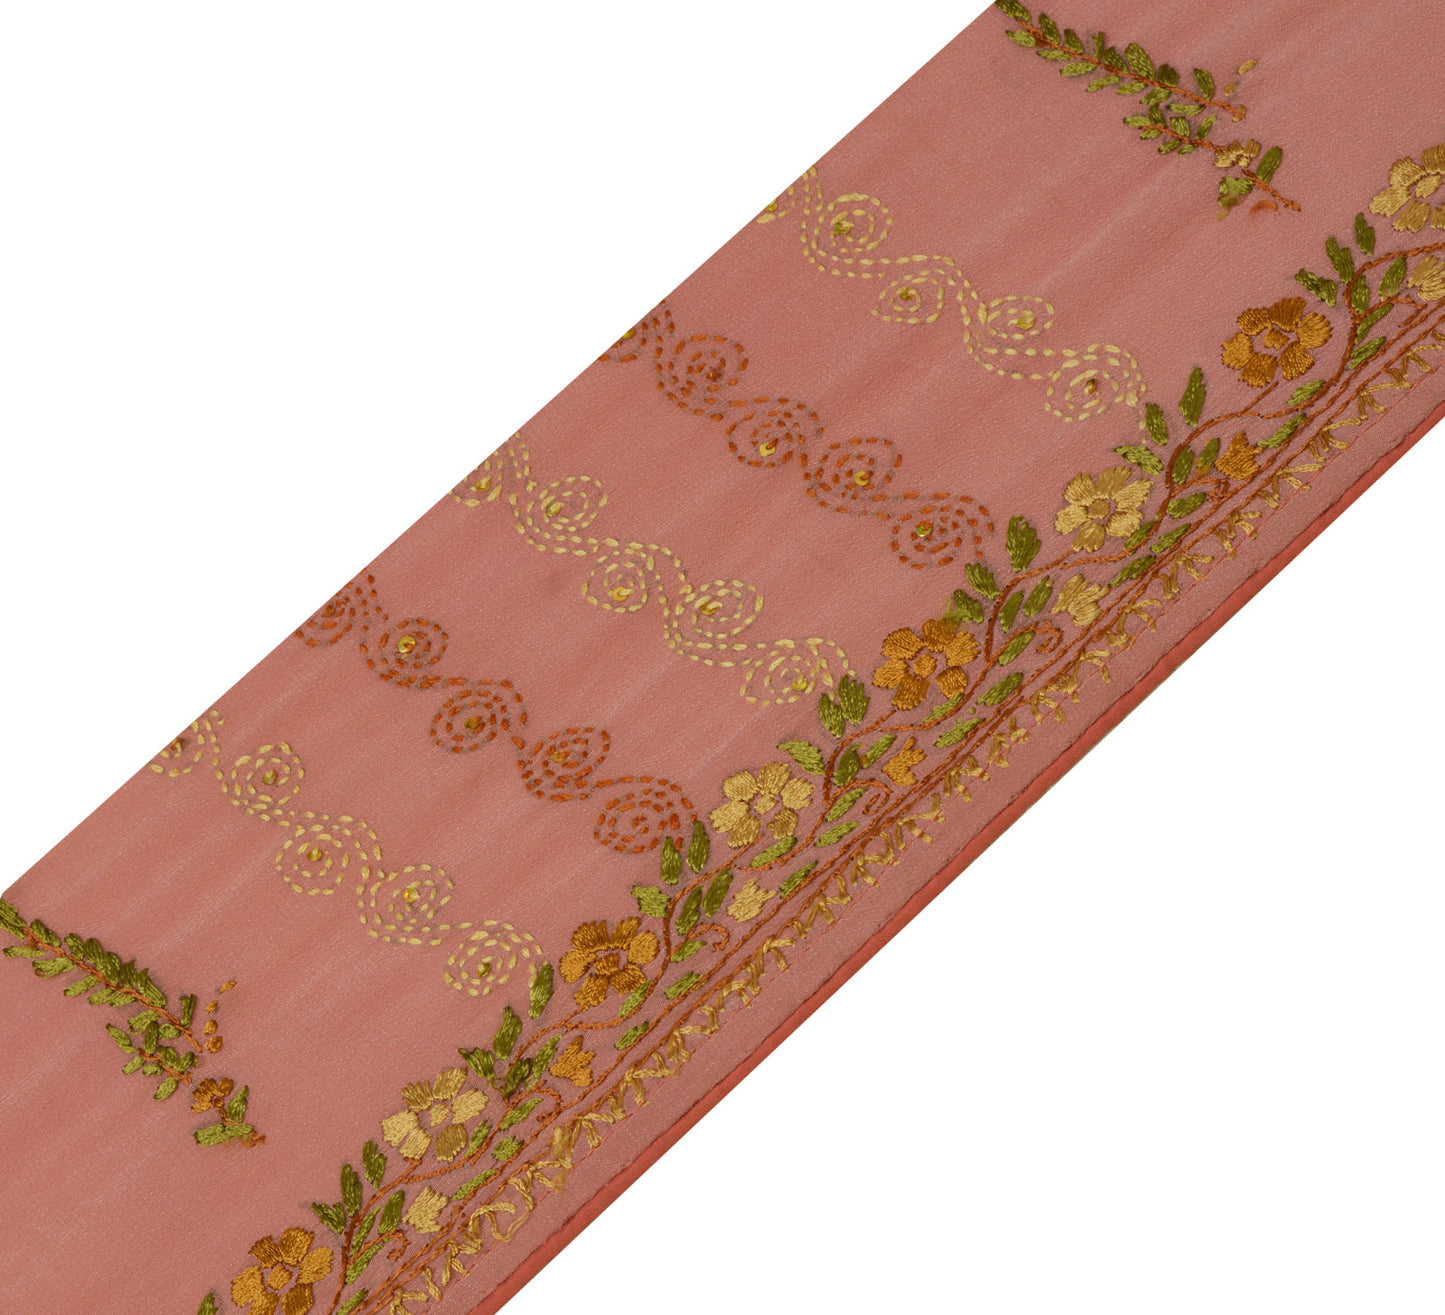 Sushila Vintage Pink Sari Border Indian Craft Sewing Trim Embroidered Lace